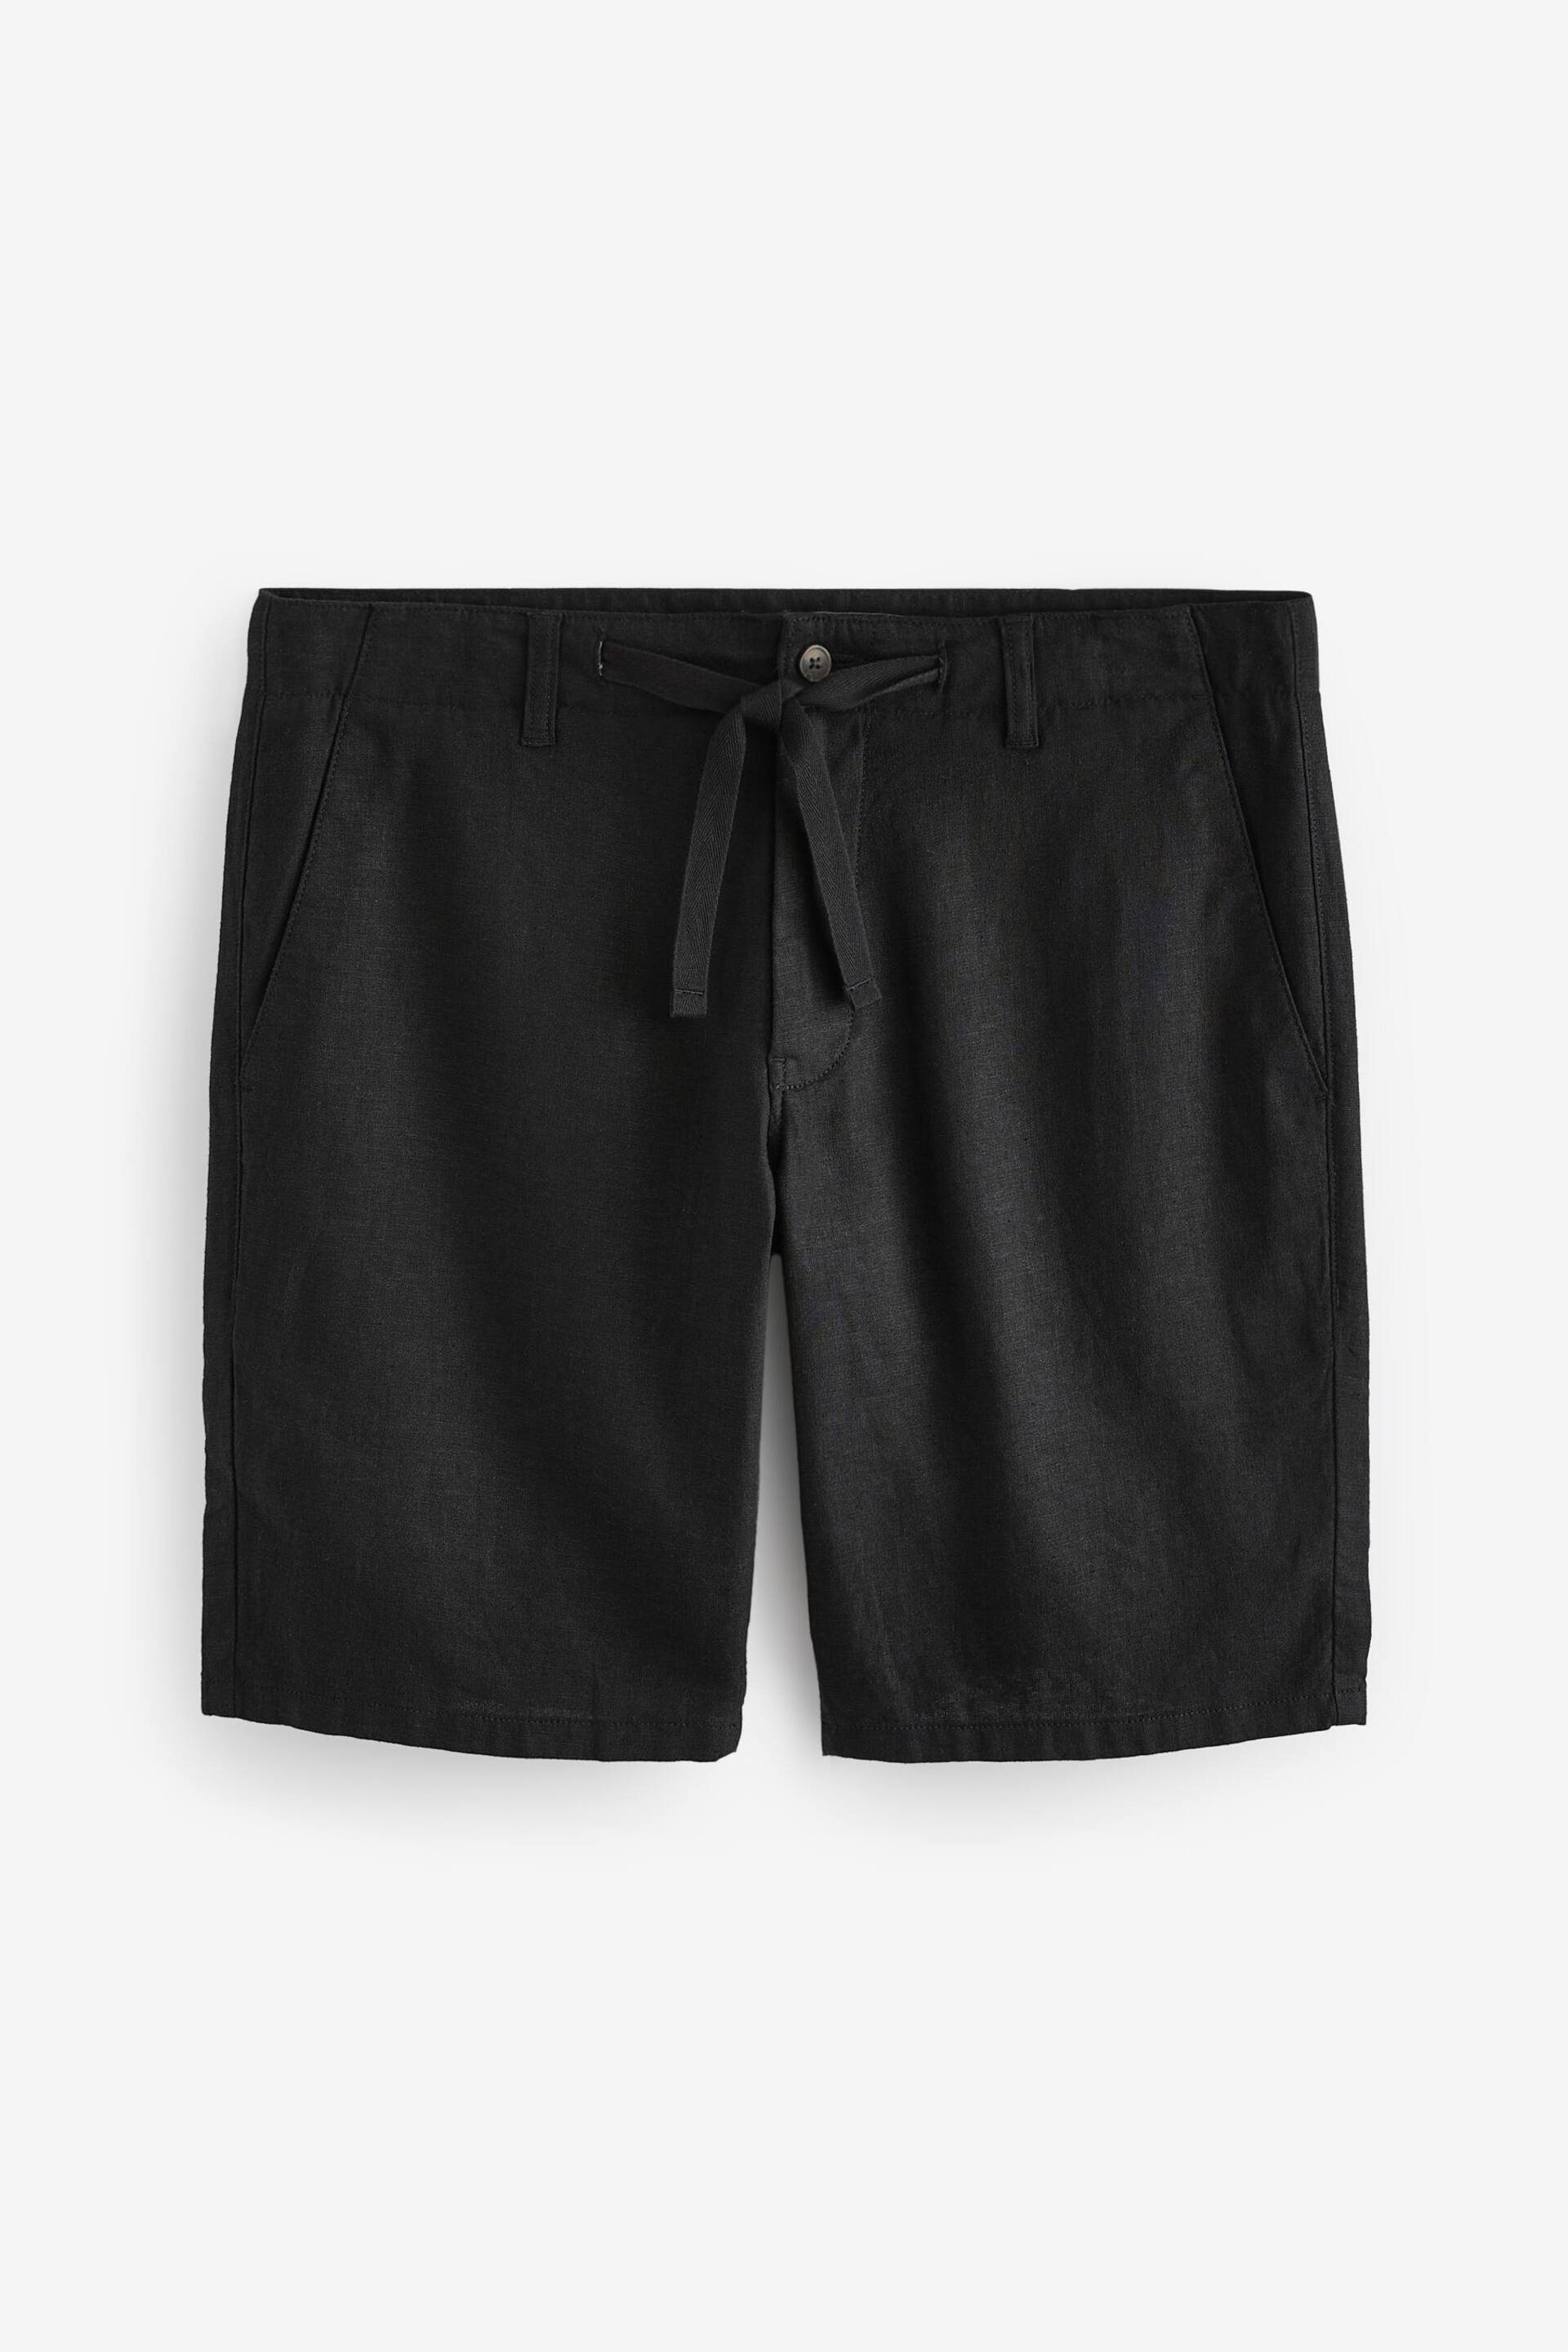 Black Linen Viscose Shorts - Image 6 of 10